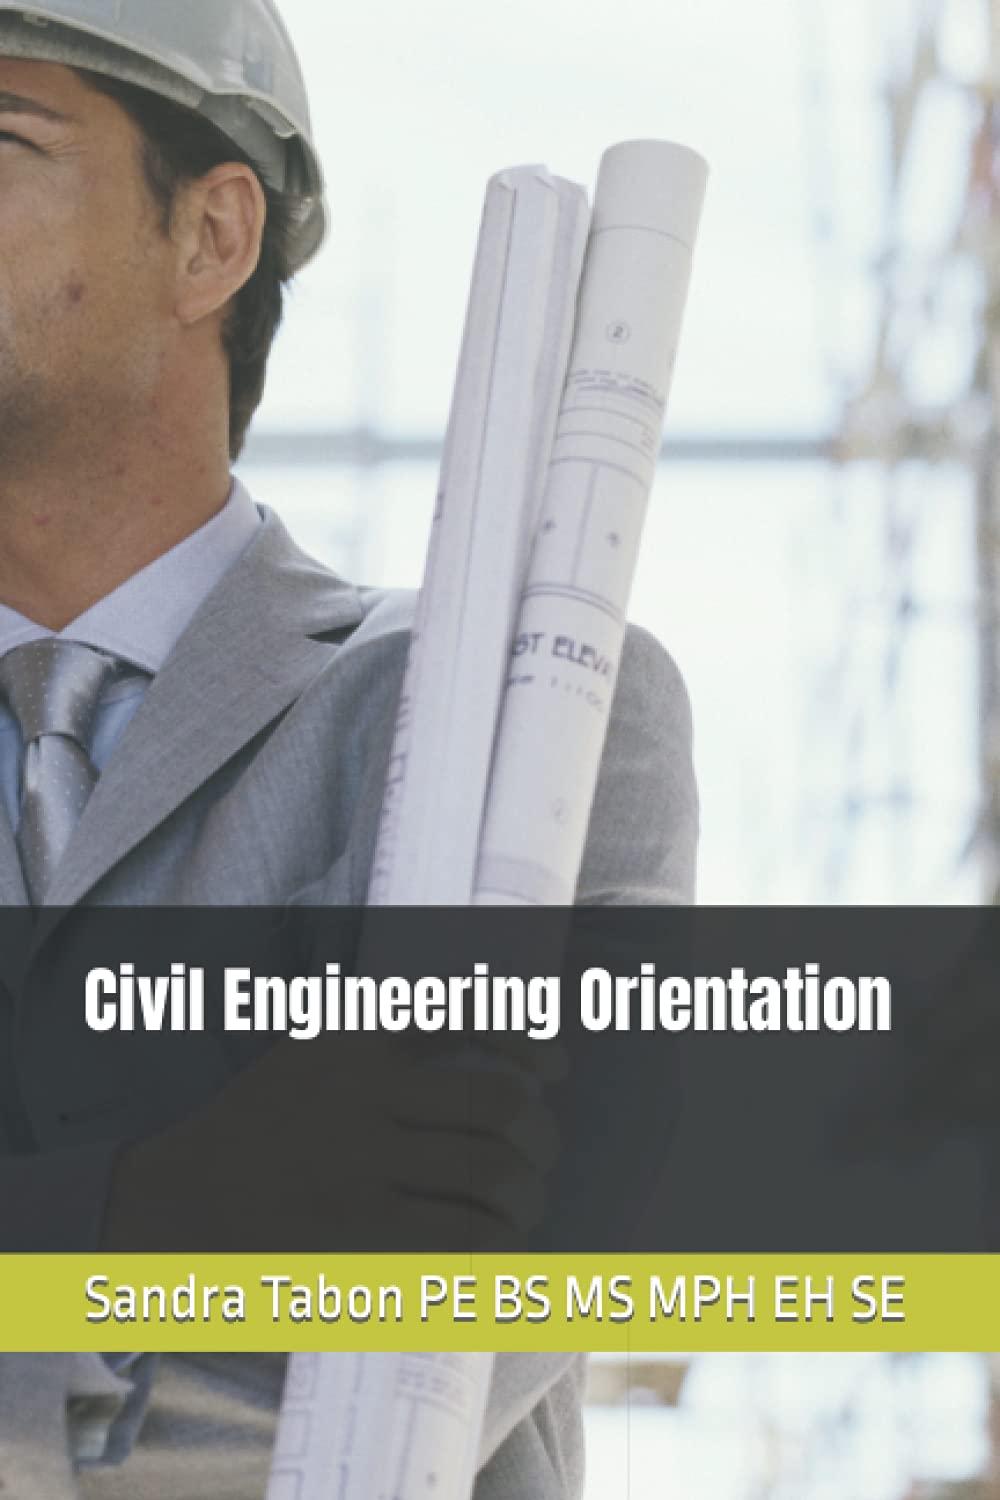 civil engineering orientation 1st edition engr sandra tabon pe bs ms mph eh se b09dmp89gd, 979-8466195446